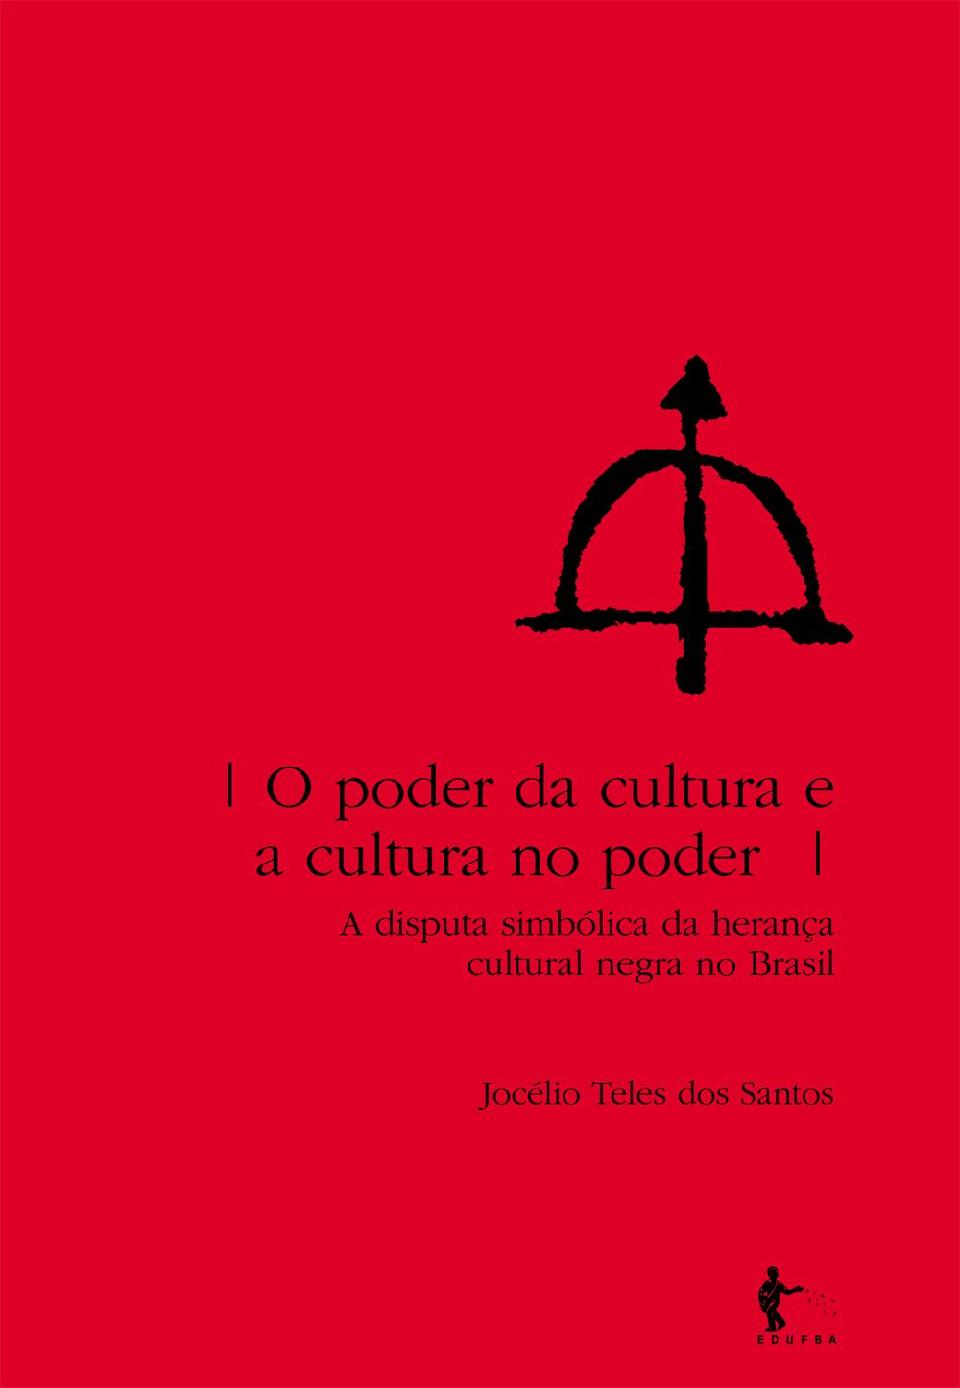 O poder da cultura e a cultura no poder : disputa simbólica da herança cultural negra no Brasil